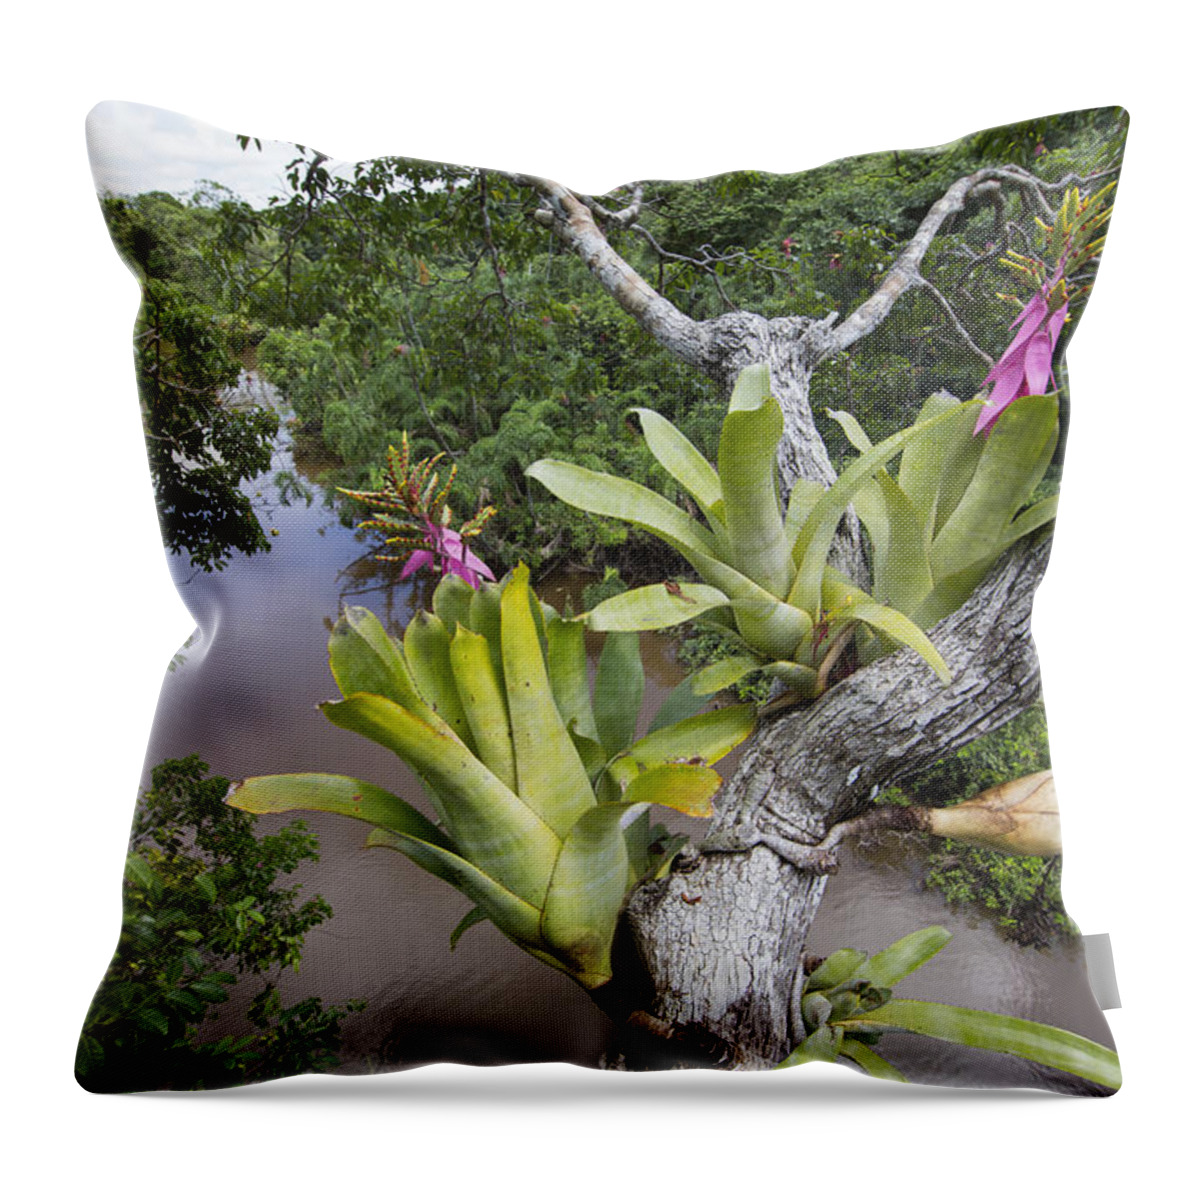 Cyril Ruoso Throw Pillow featuring the photograph Bromeliad Pair Flowering Pacaya Samiria by Cyril Ruoso